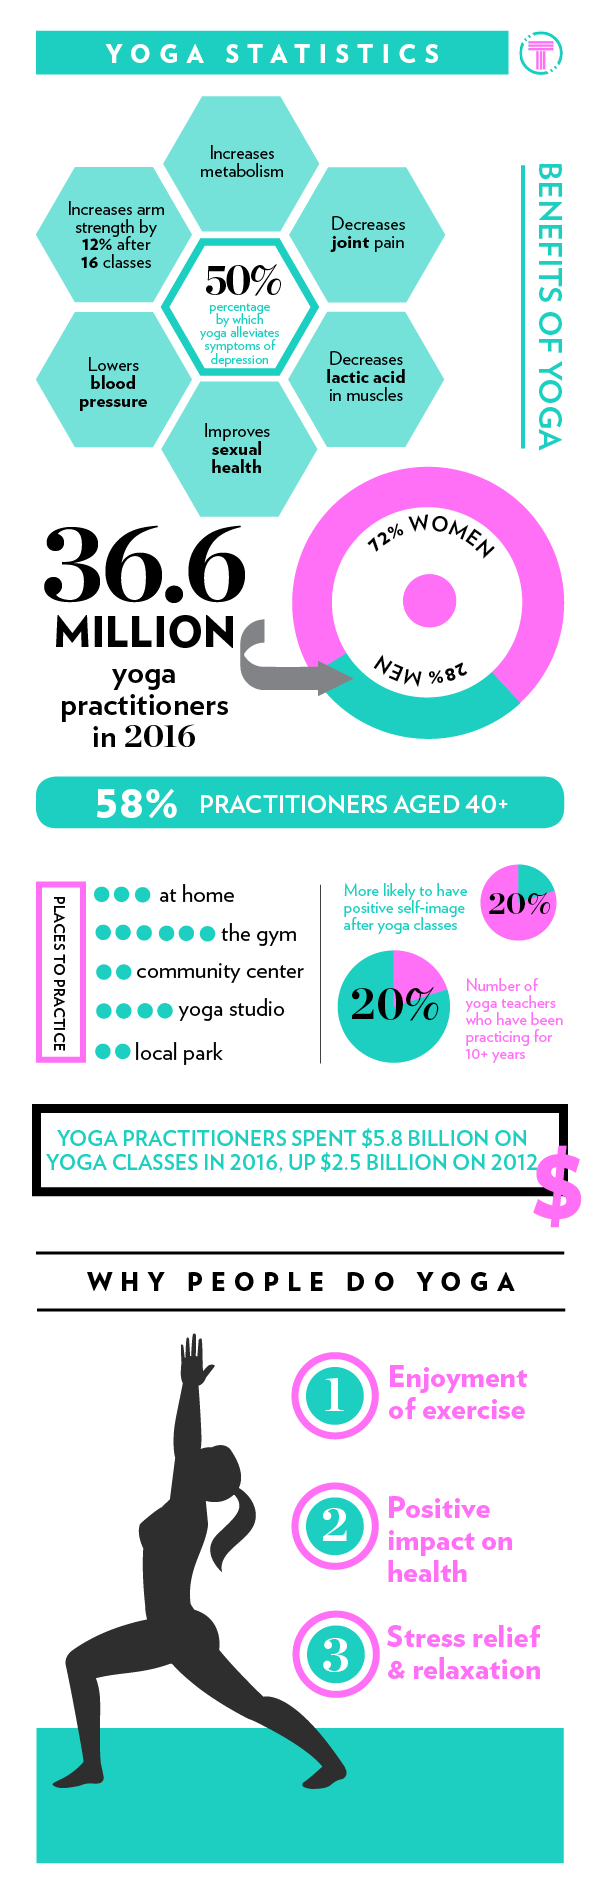 yoga industry statistics, facts, demographics & infographic - YOGI TIMES